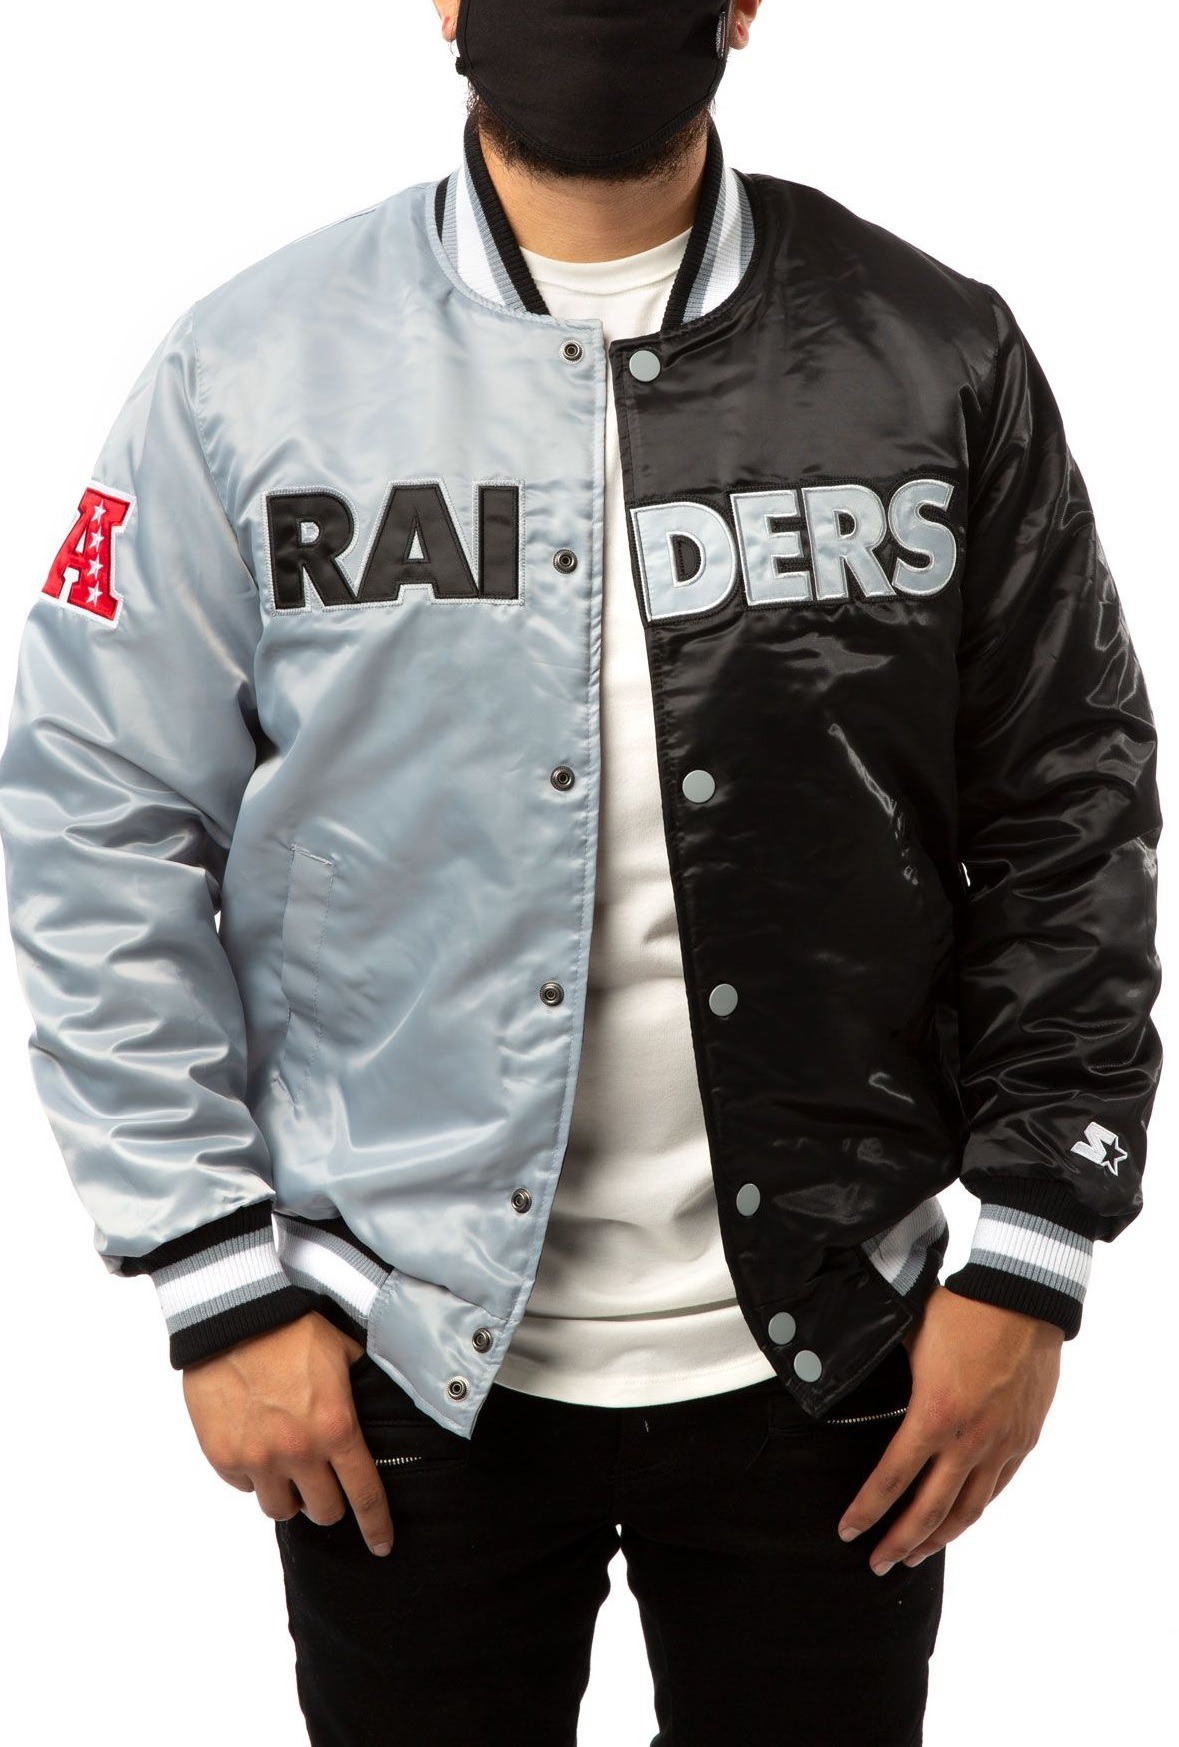 Las Vegas Raiders Bomber Satin Black And Grey Jacket